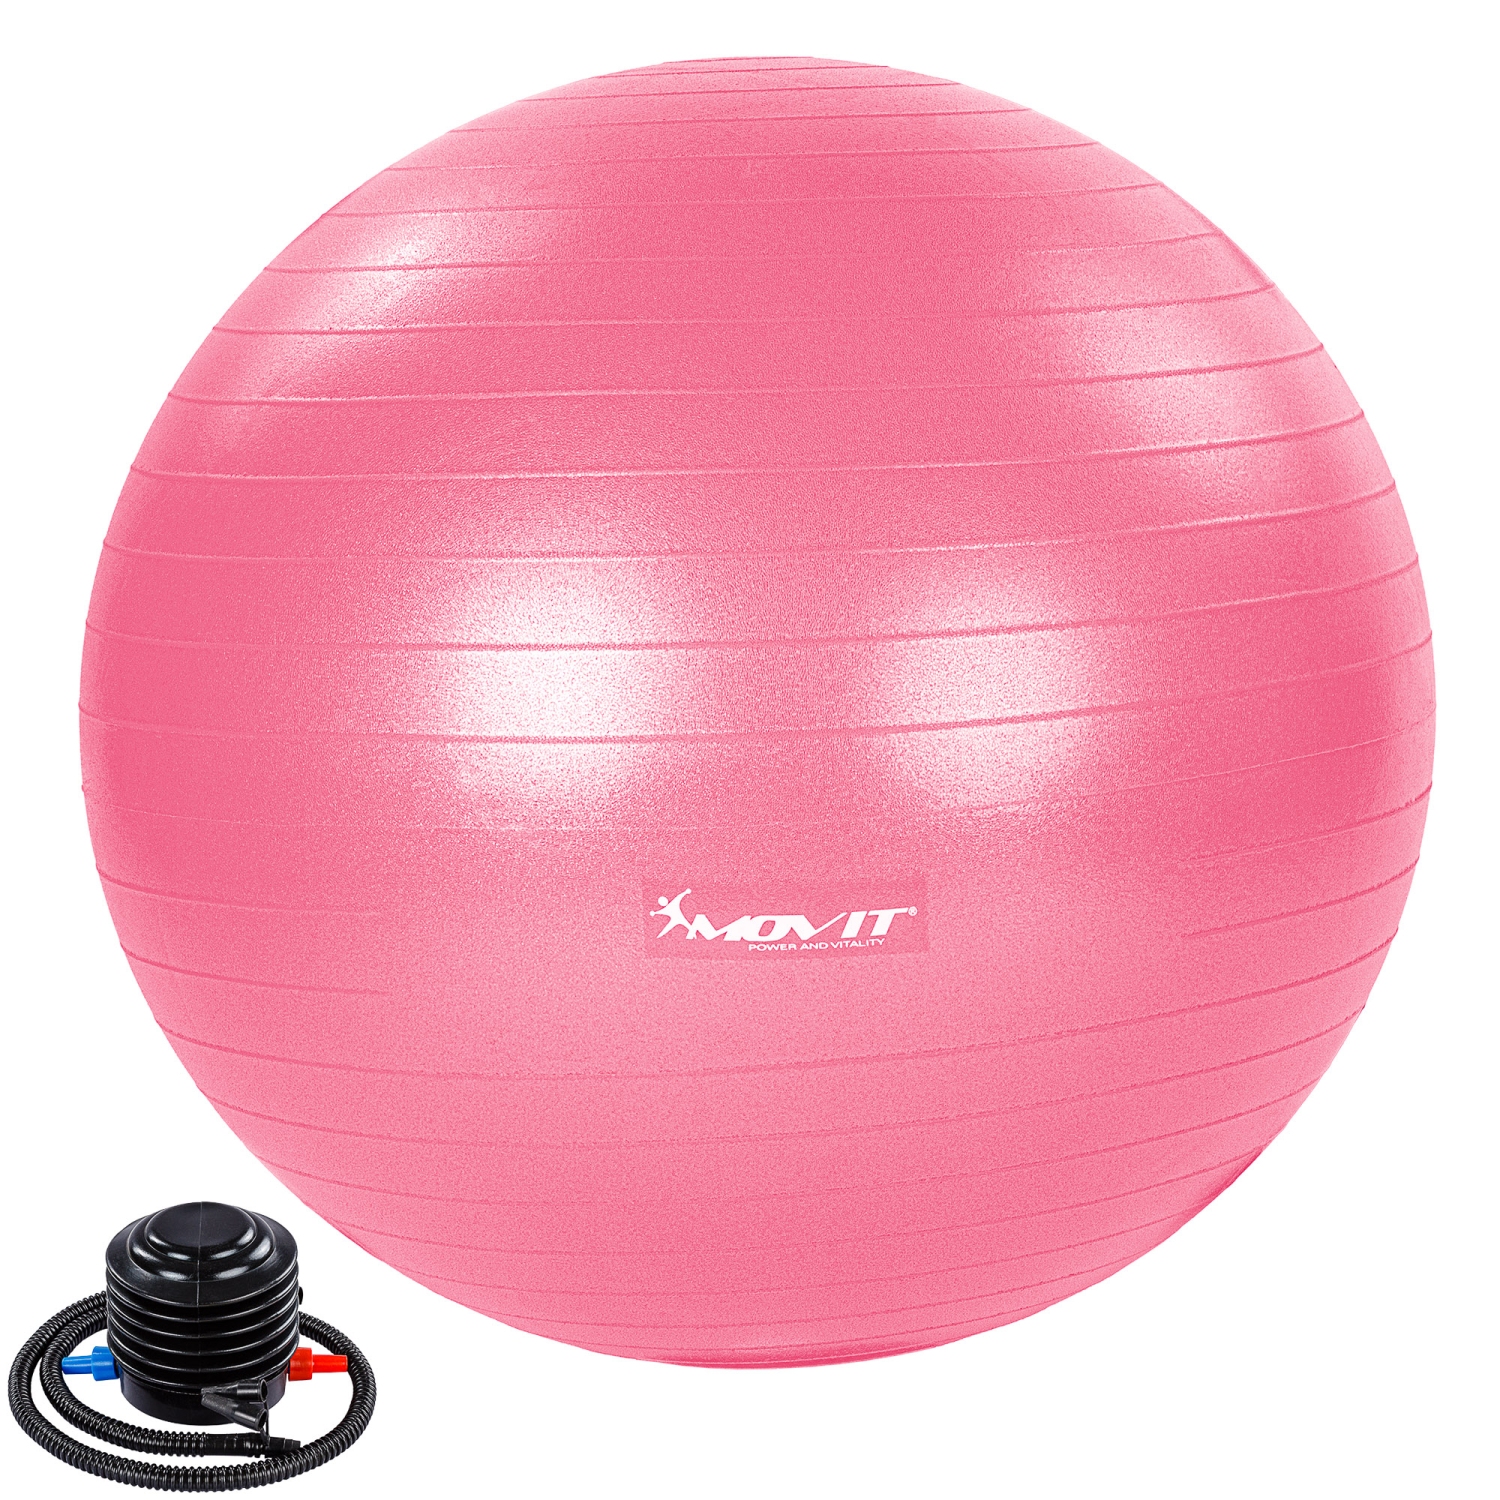 Yoga bal – Pilates bal – Fitness bal – 65 cm – Inclusief pomp – Roze